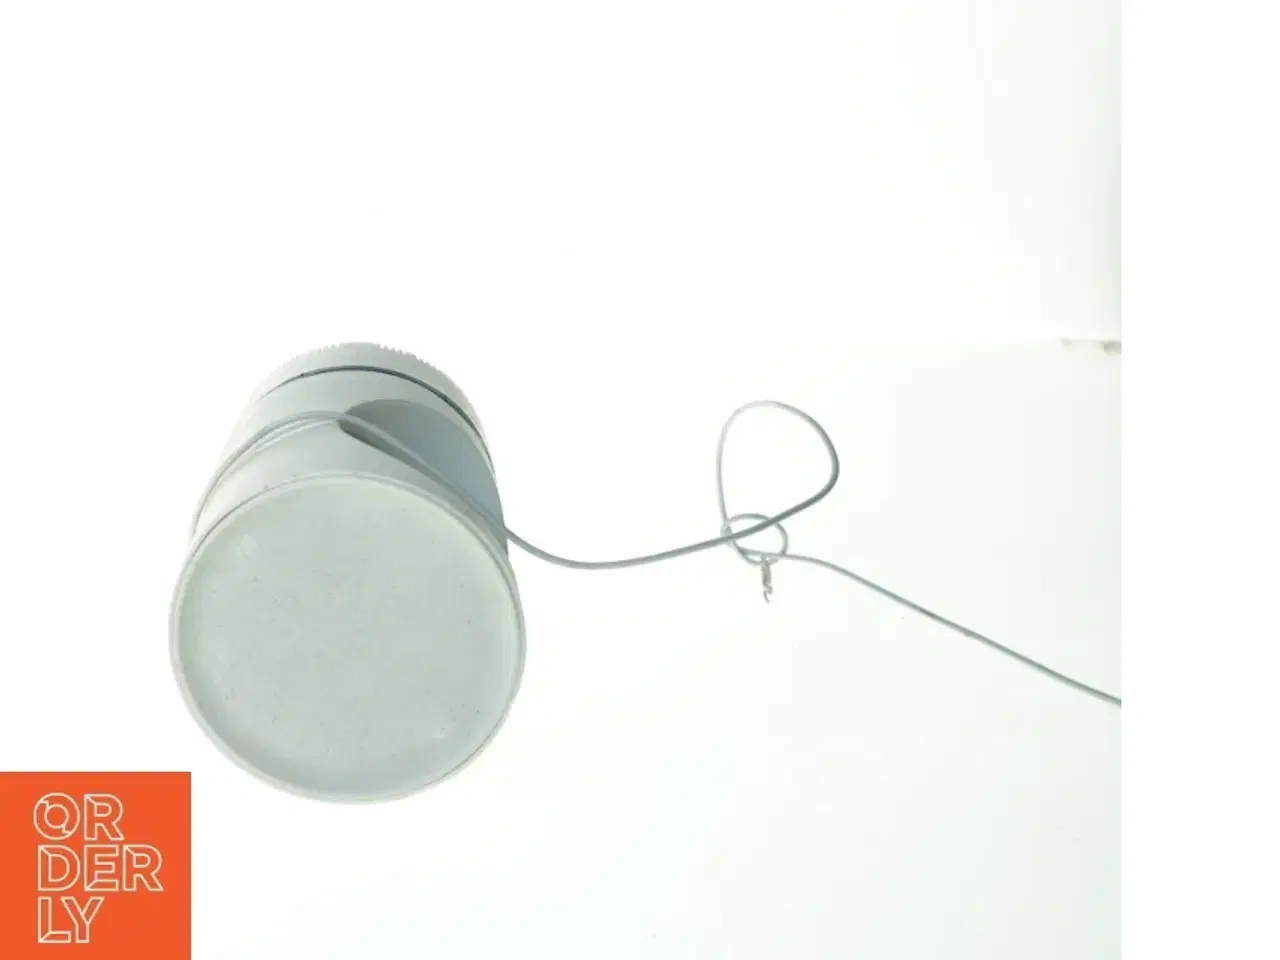 Billede 2 - Mygge lampe (str. 10 x 18 cm)